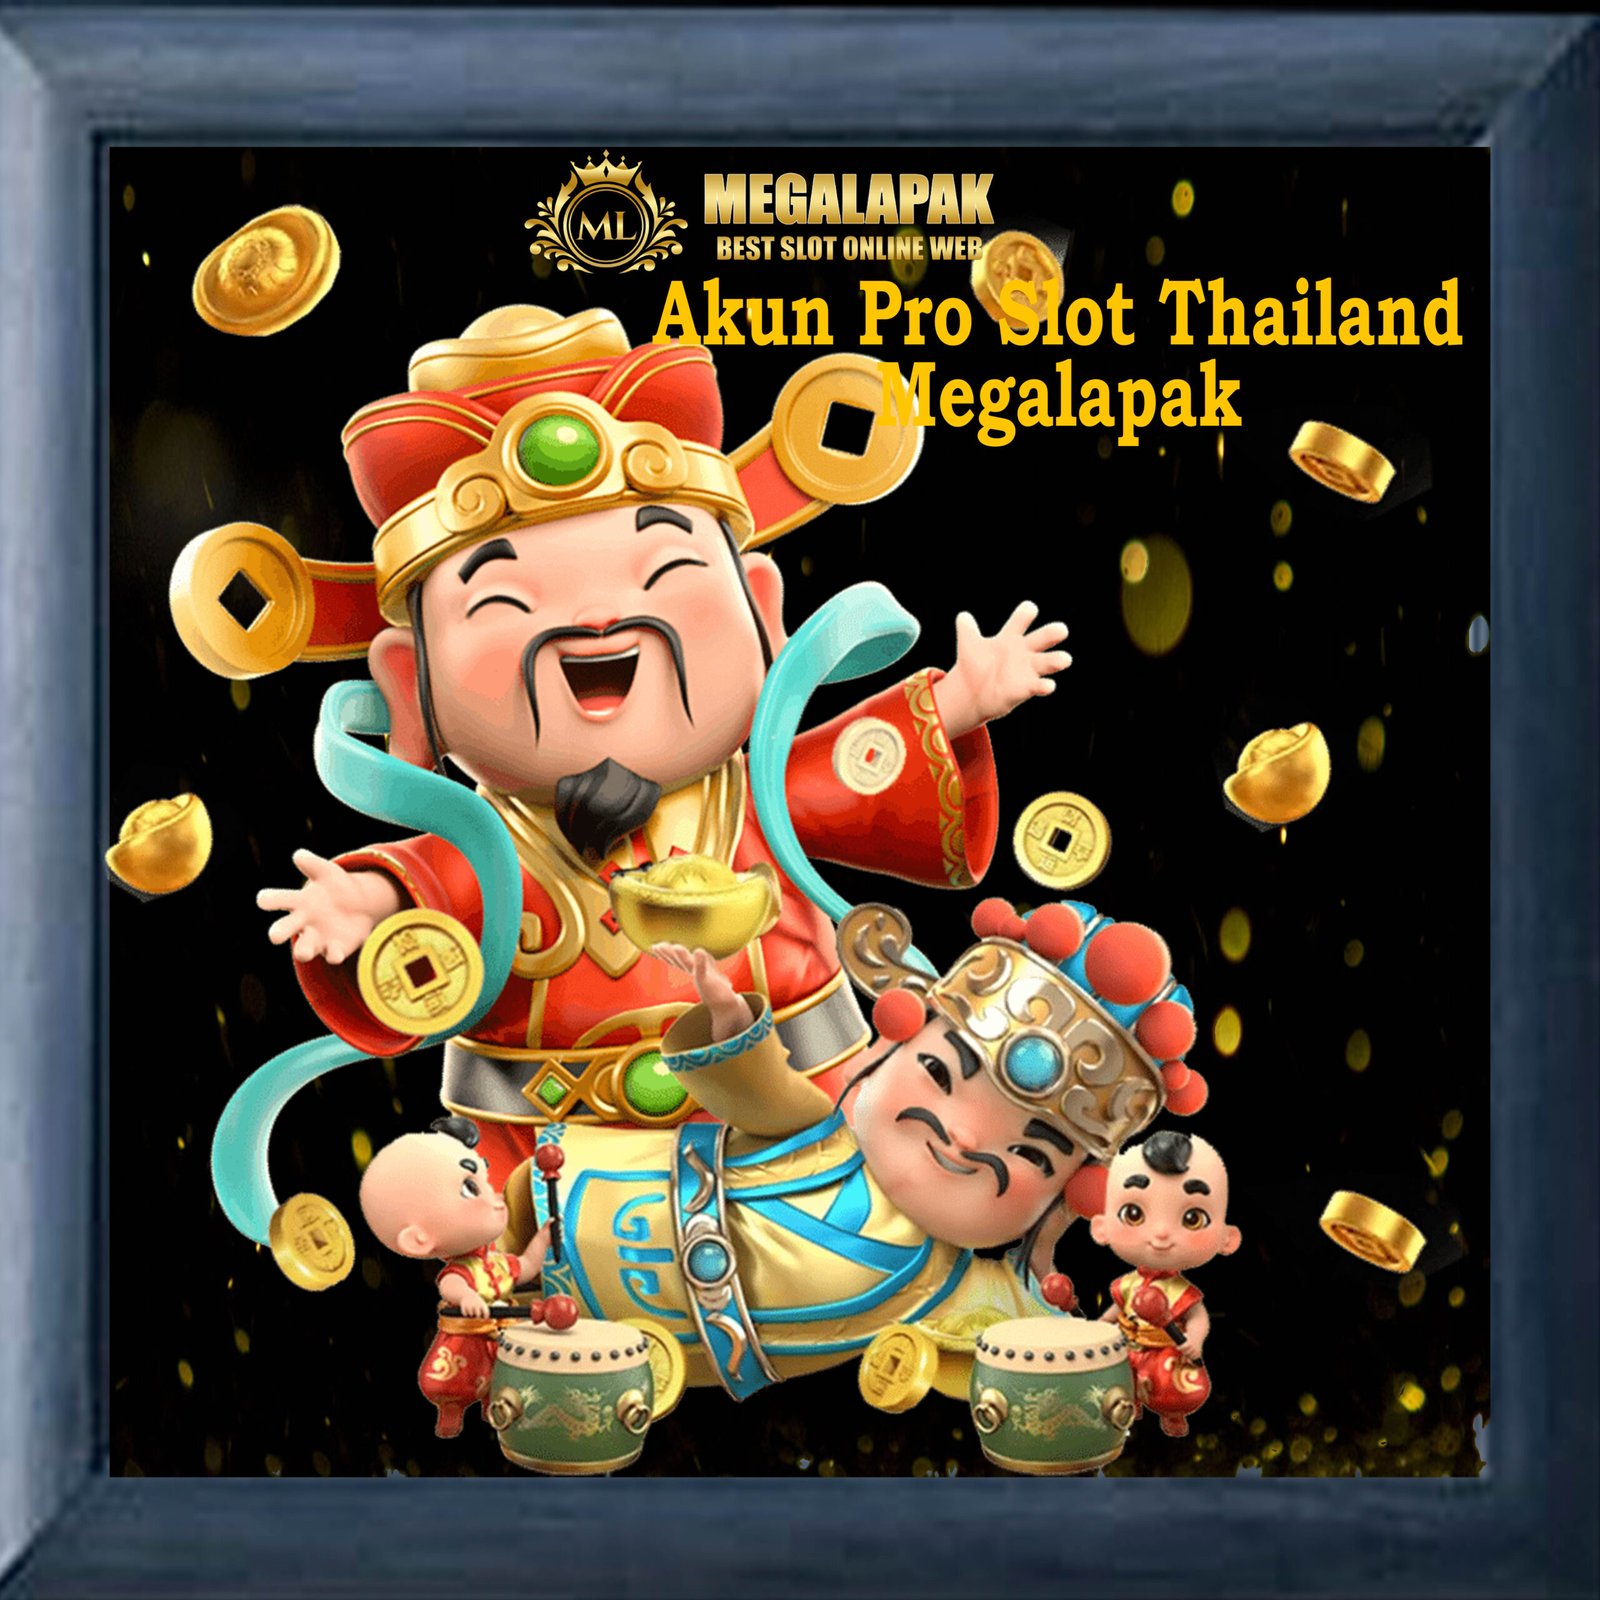 Akun Pro Slot Thailand Megalapak